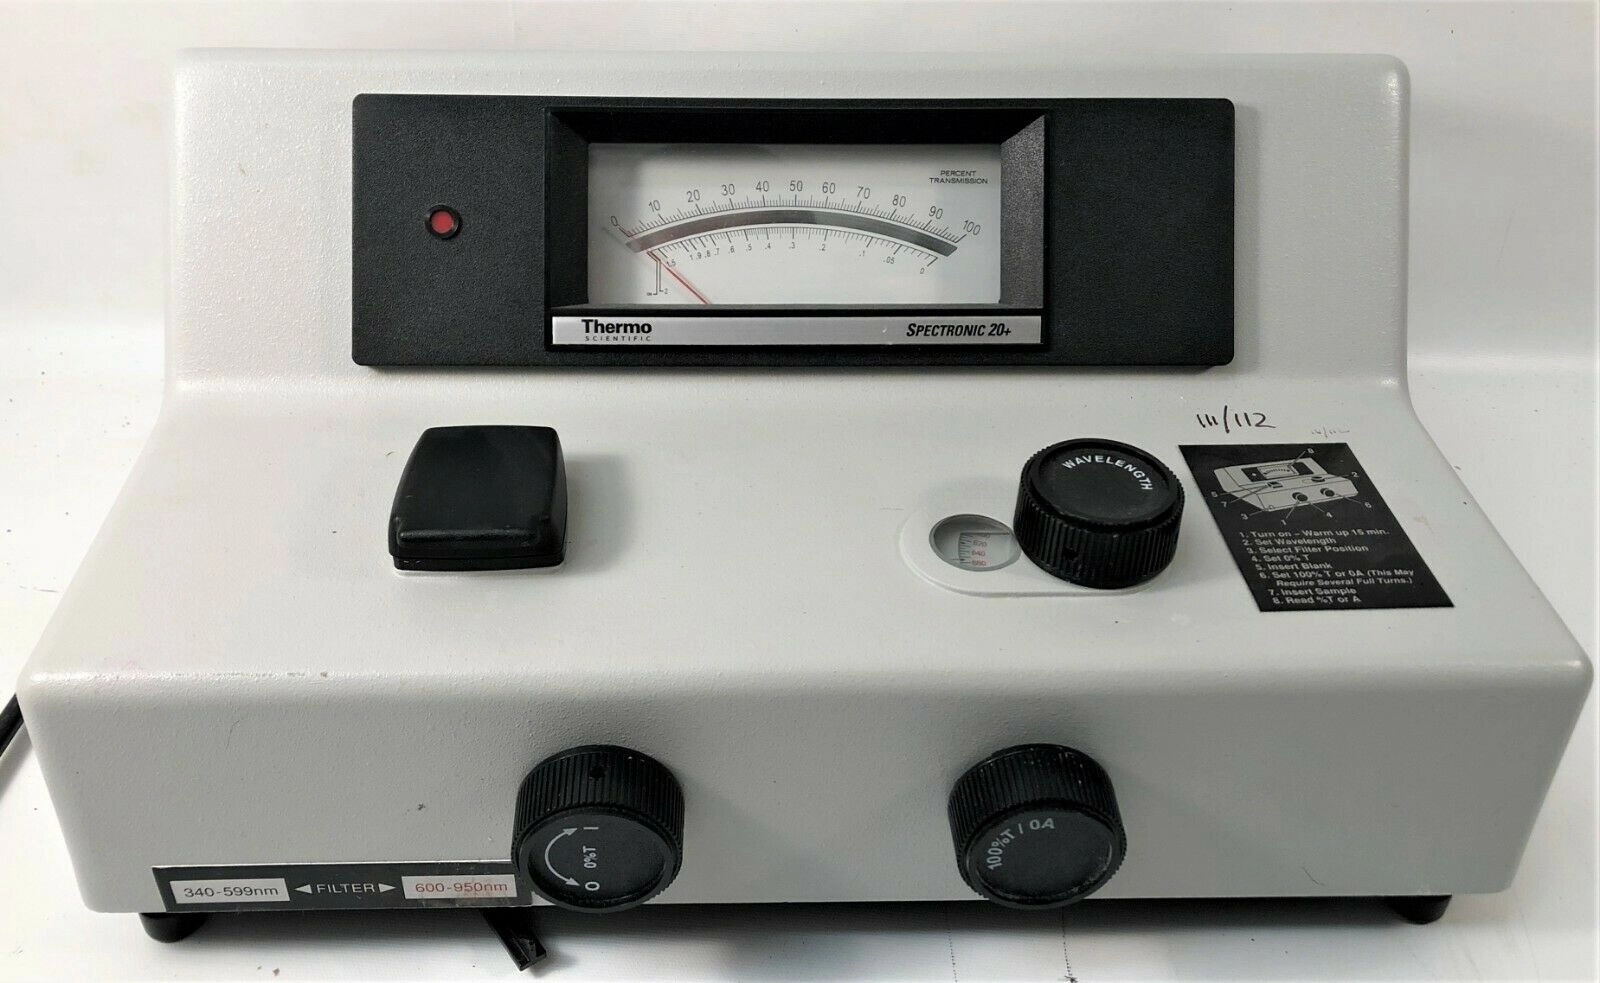 Spectroscope in Metal Case - 1003184 - U21877 - Spectrophotometer - 3B  Scientific